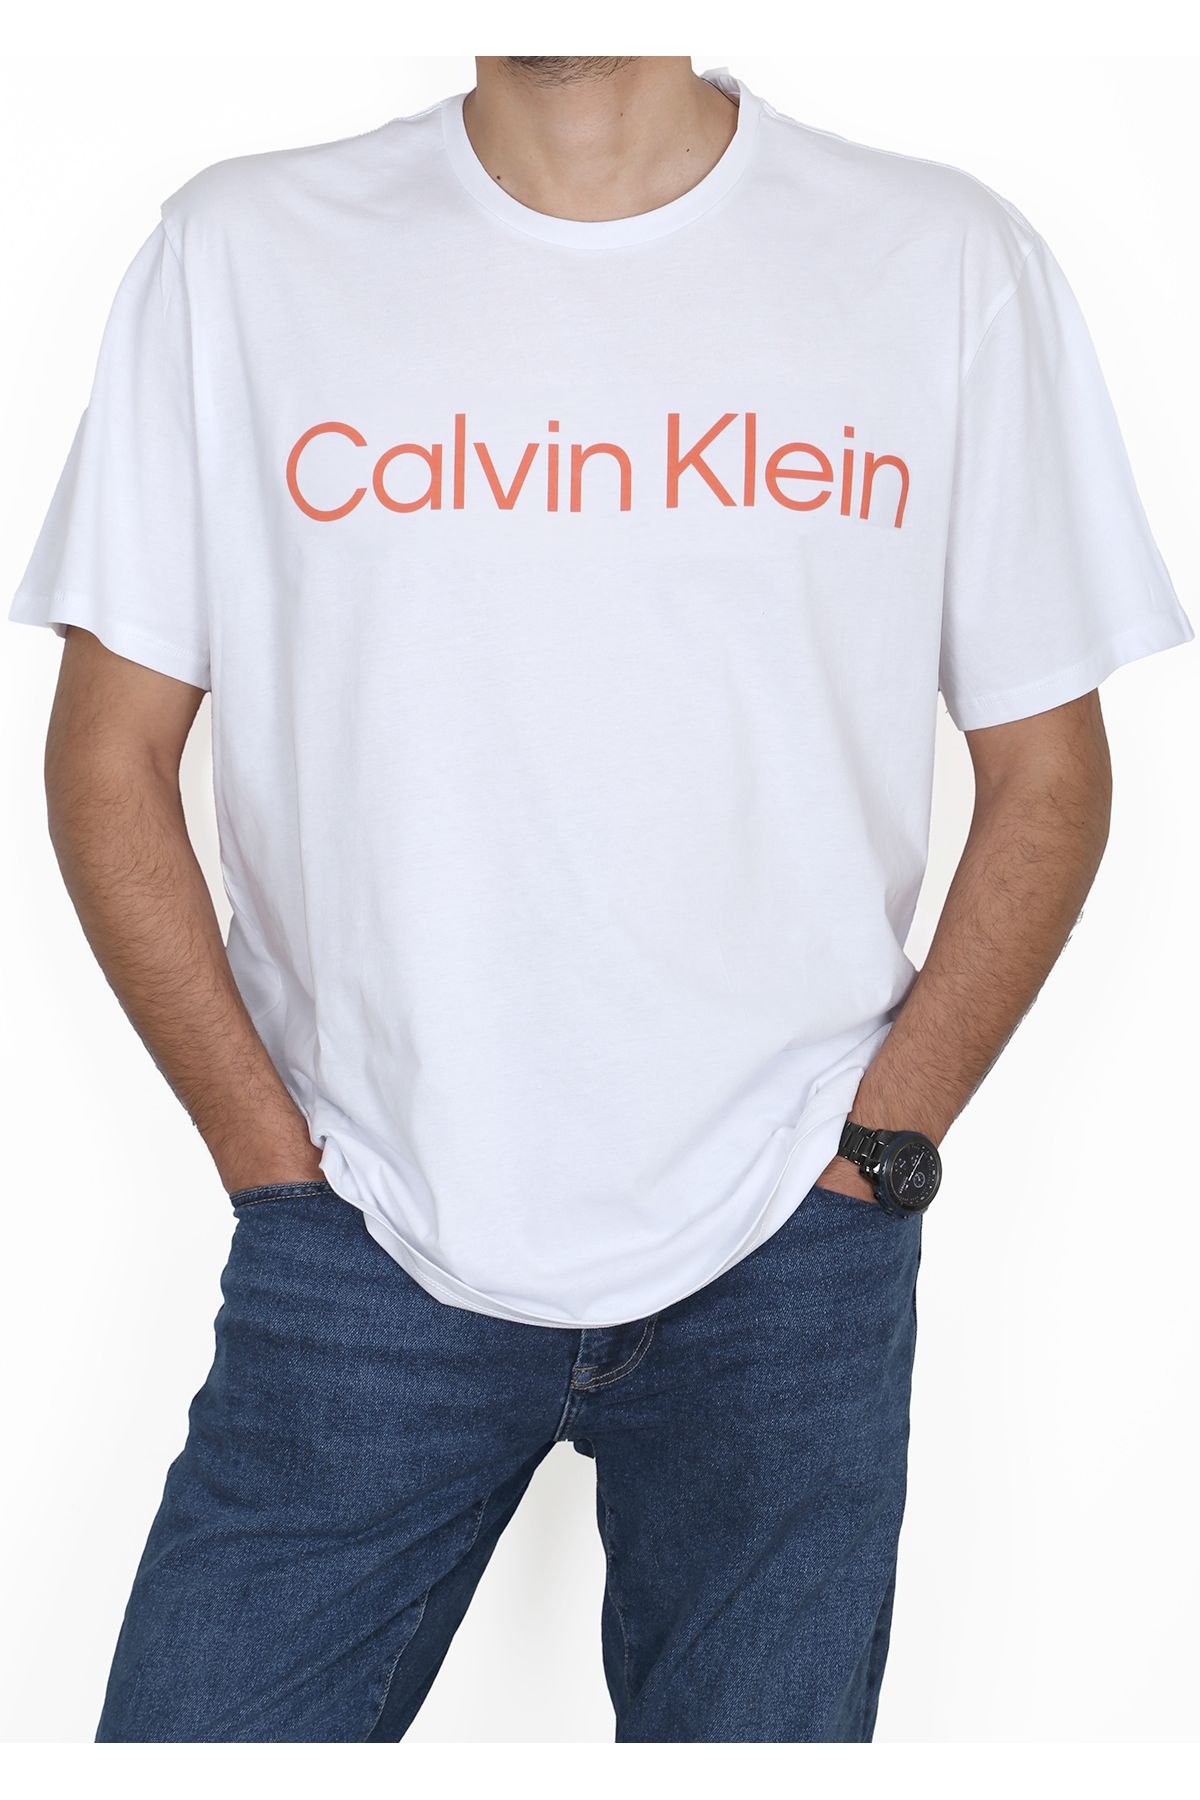 Calvin Klein Erkek T-shırt 40jm930-540